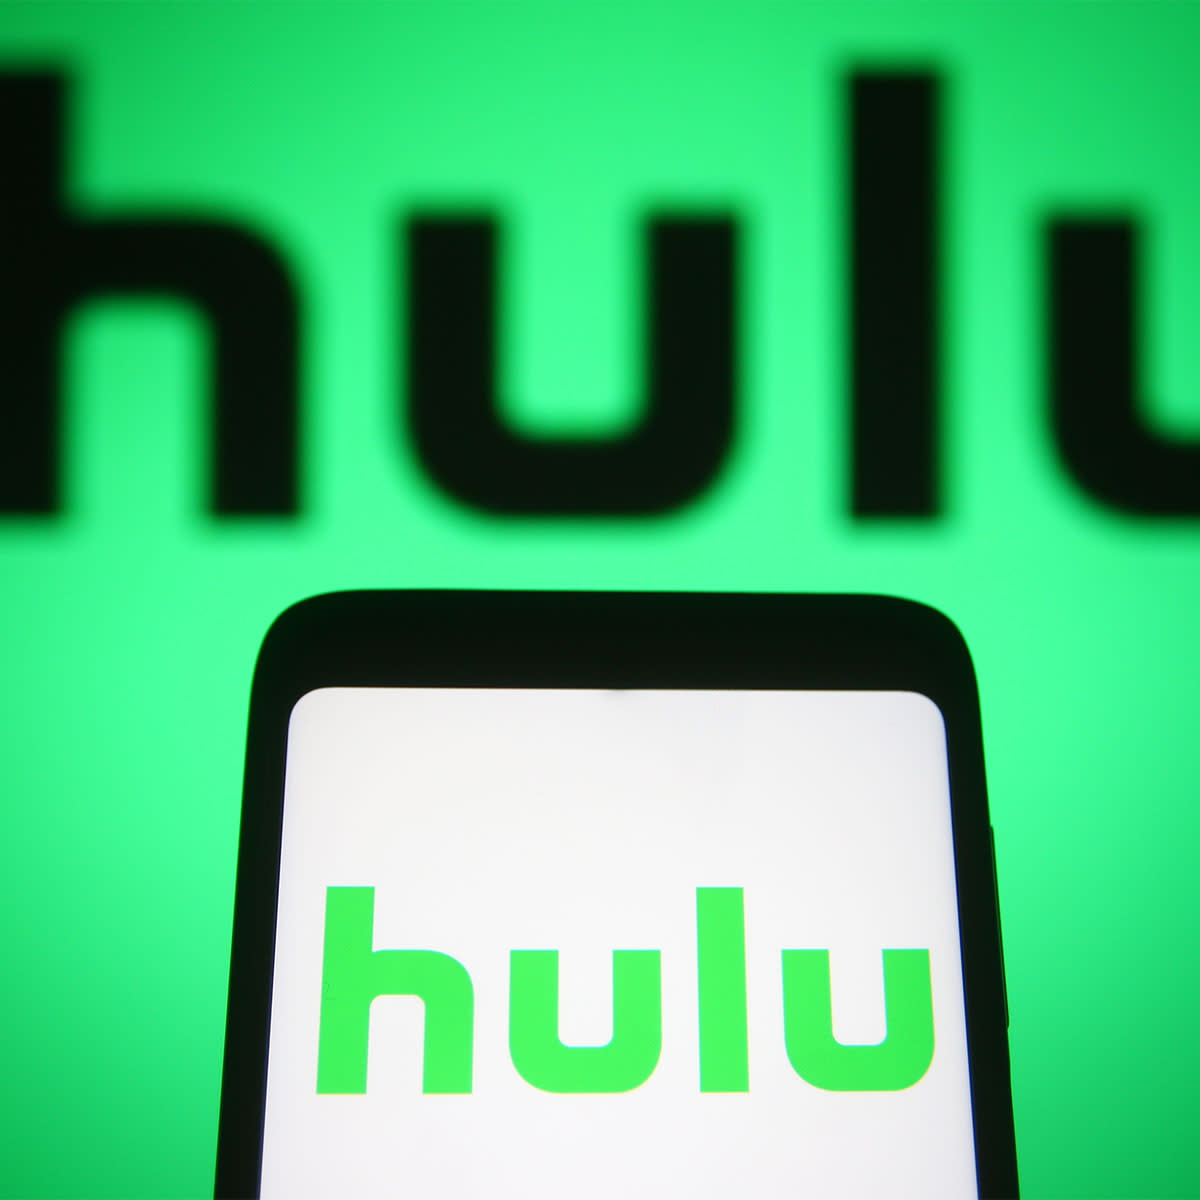 Hulu app logo and on a phone